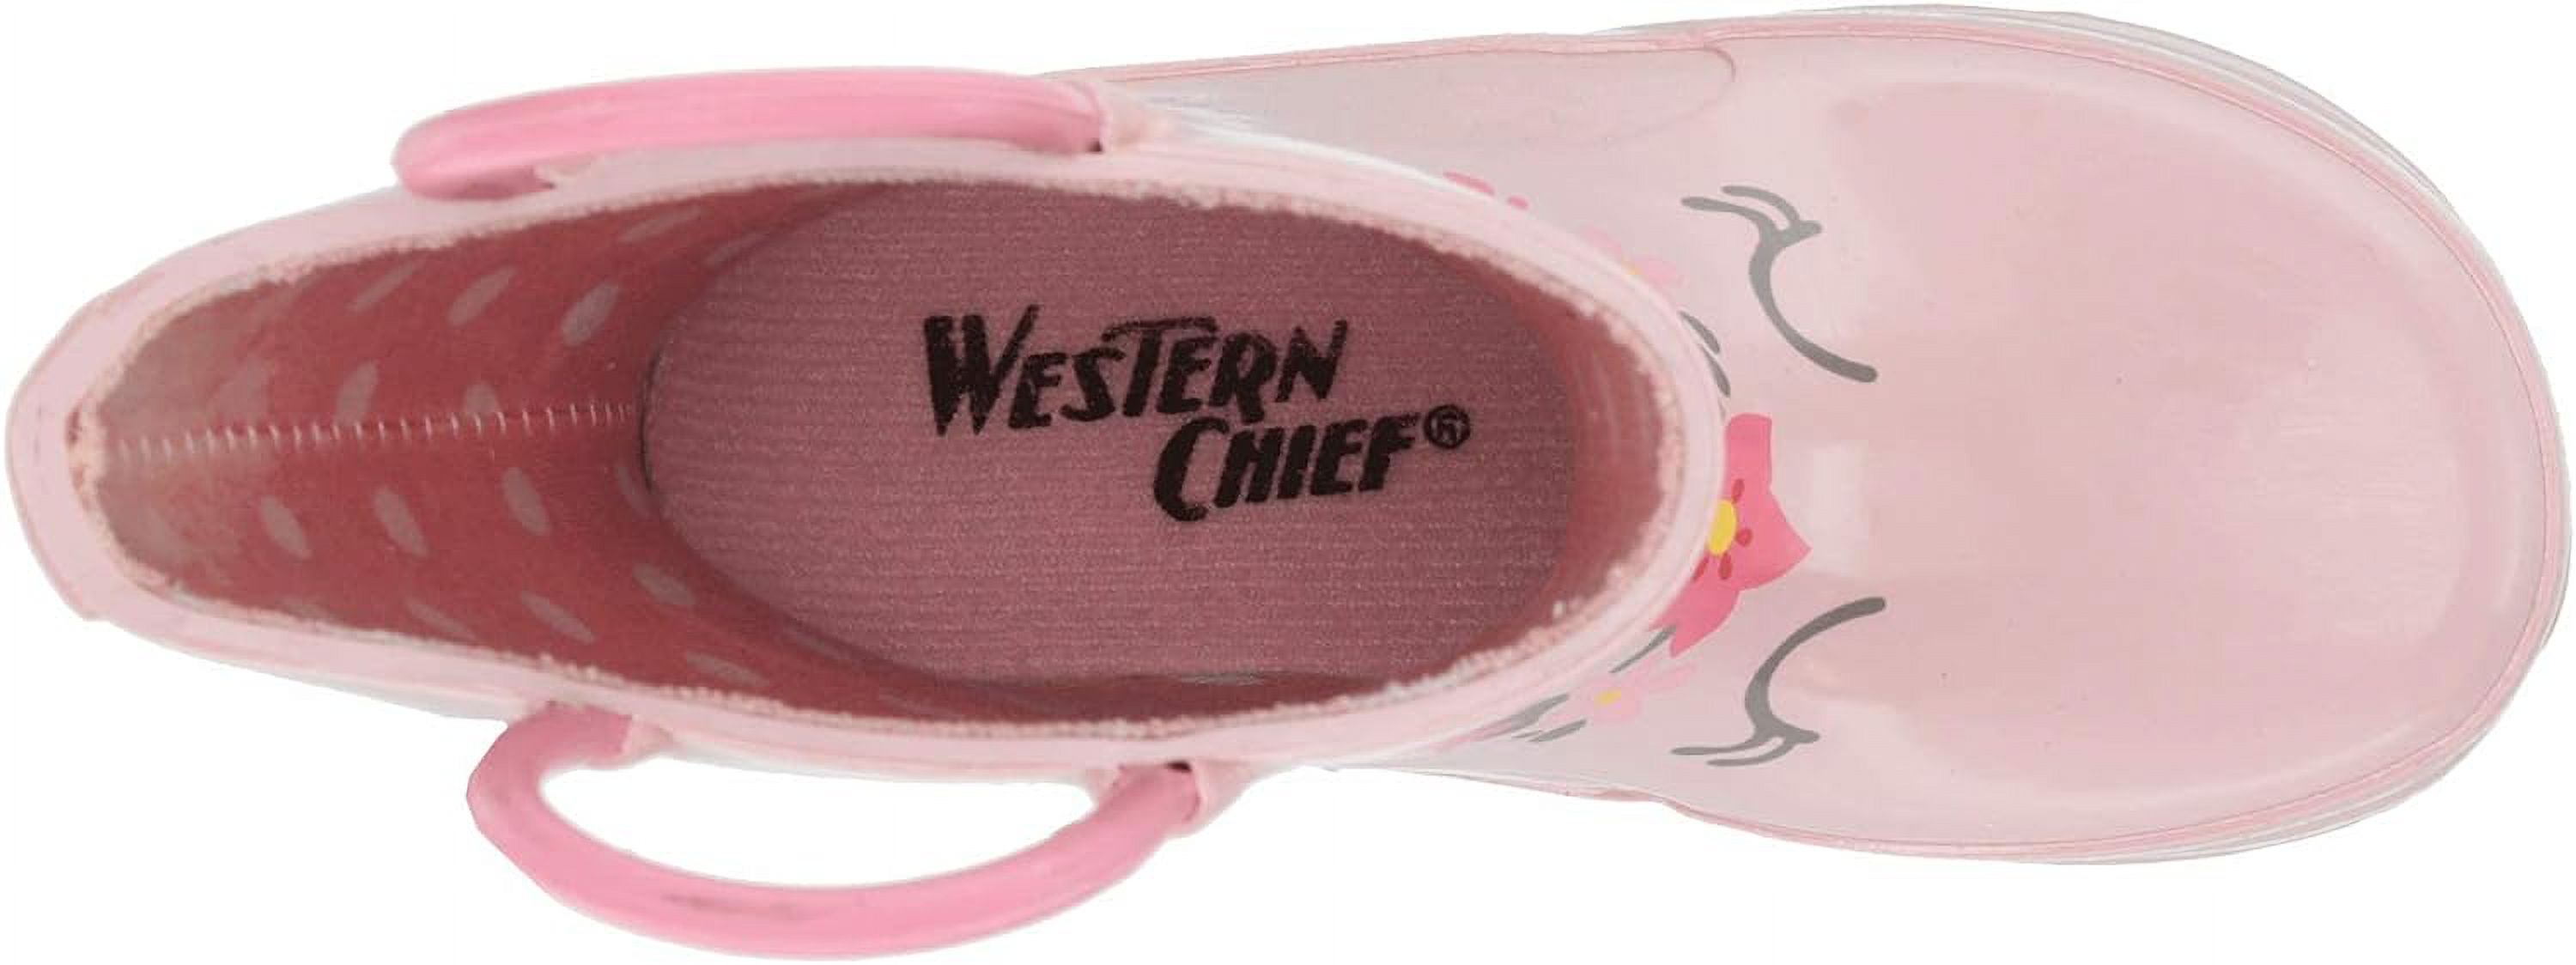 Western Chief Unity Unicorn Rain Boot (Toddler, Little Girls, & Big Girls) - image 2 of 7